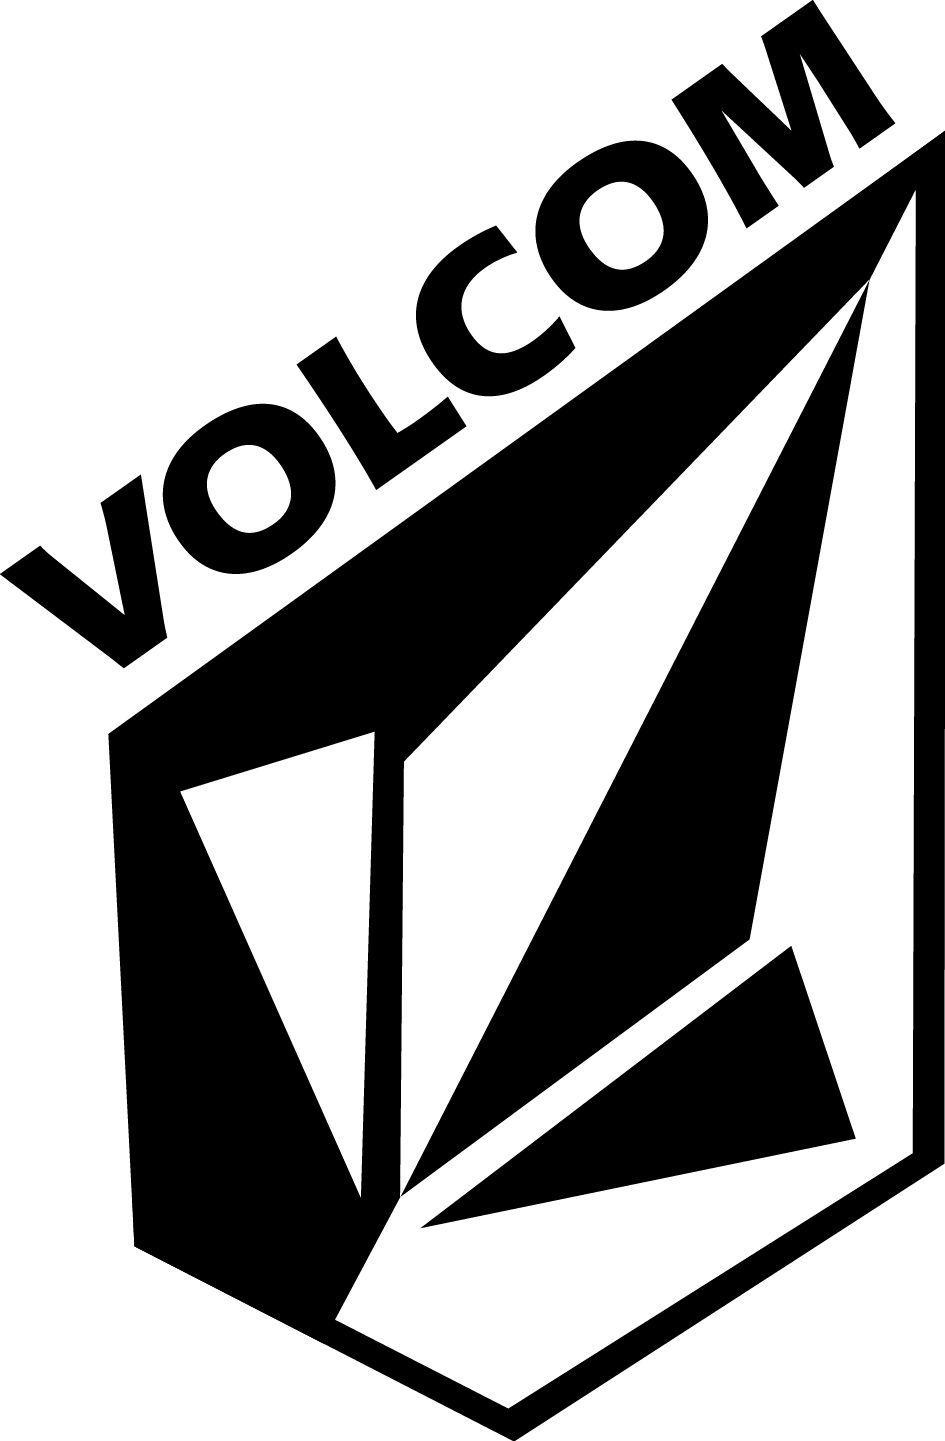 Volom Logo - Volcom Stone. Crafts. Stone, Cricut, Surf girls